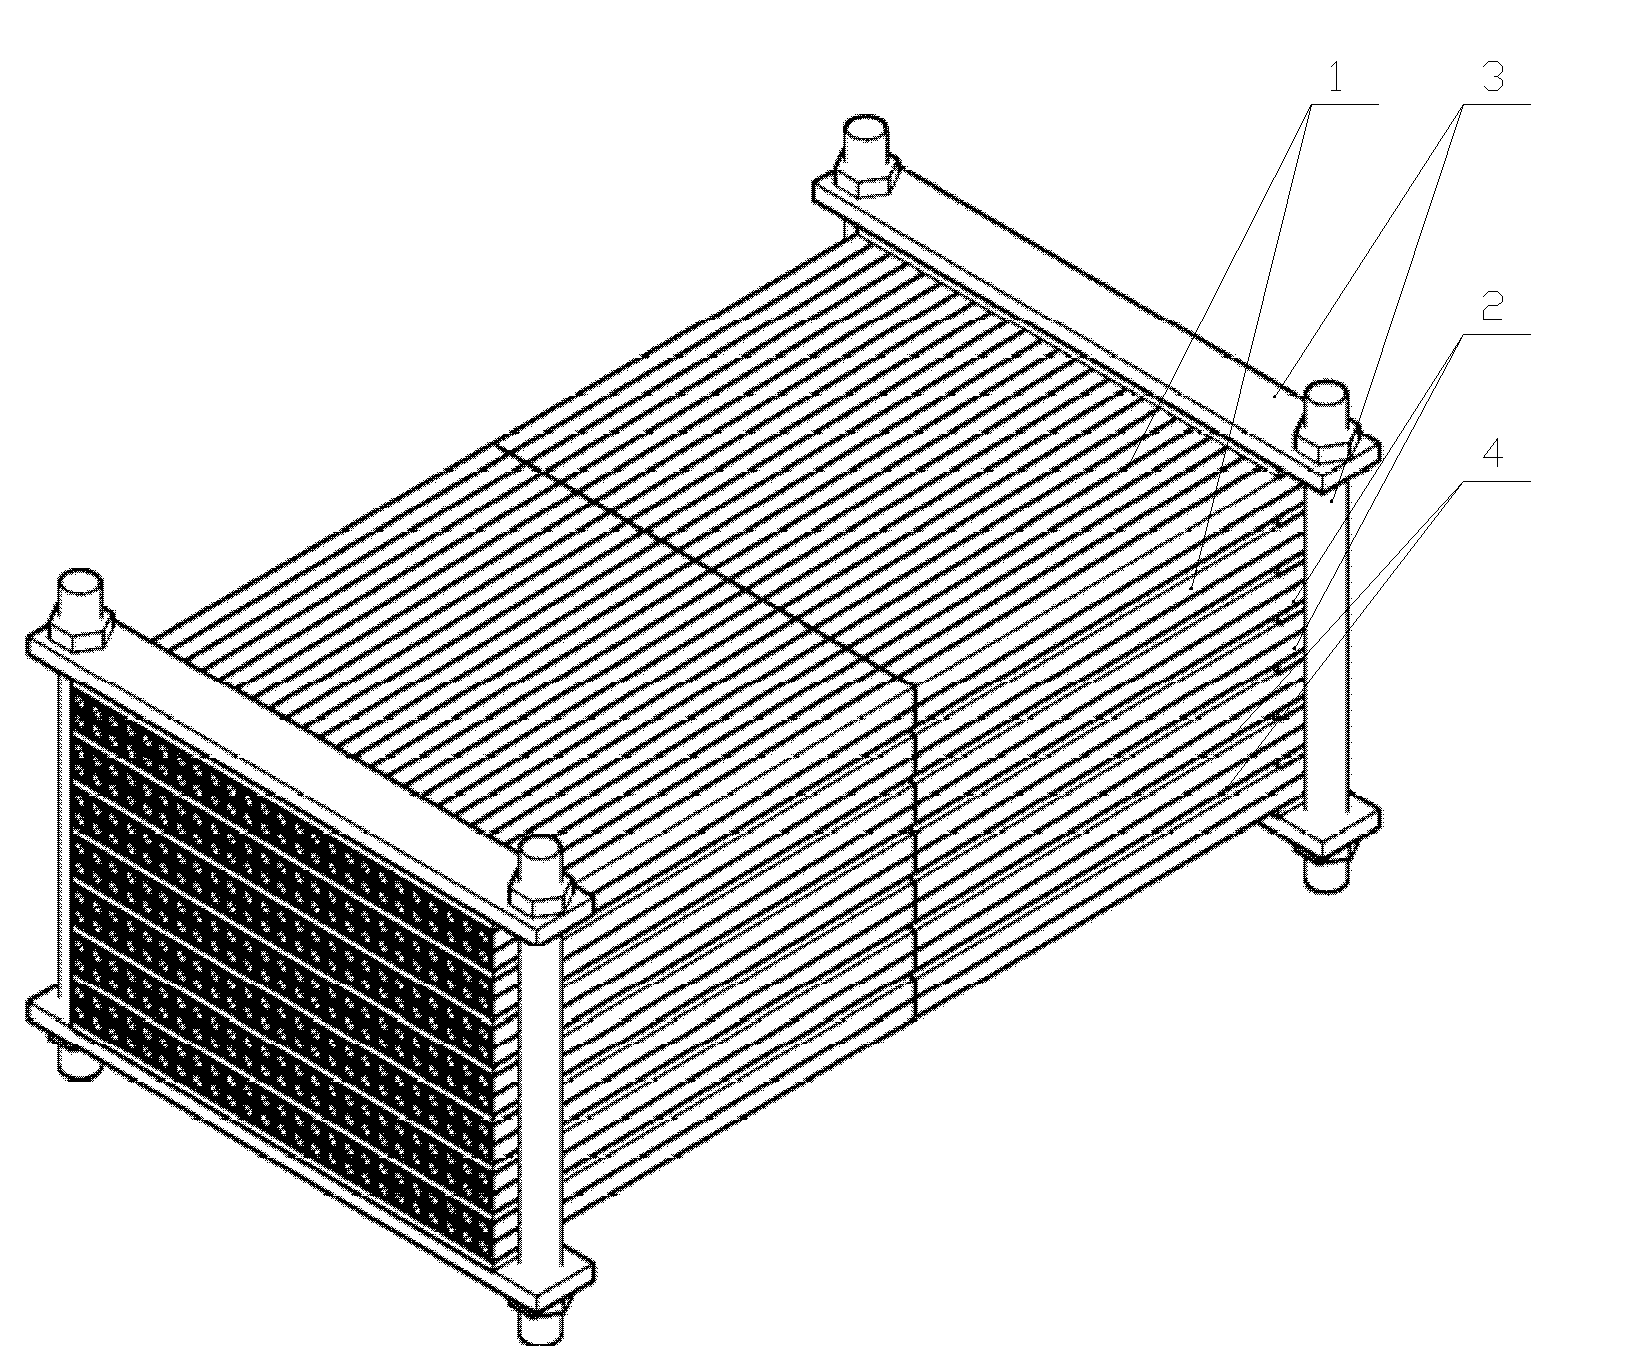 Combined honeycomb ceramic membrane filtering element